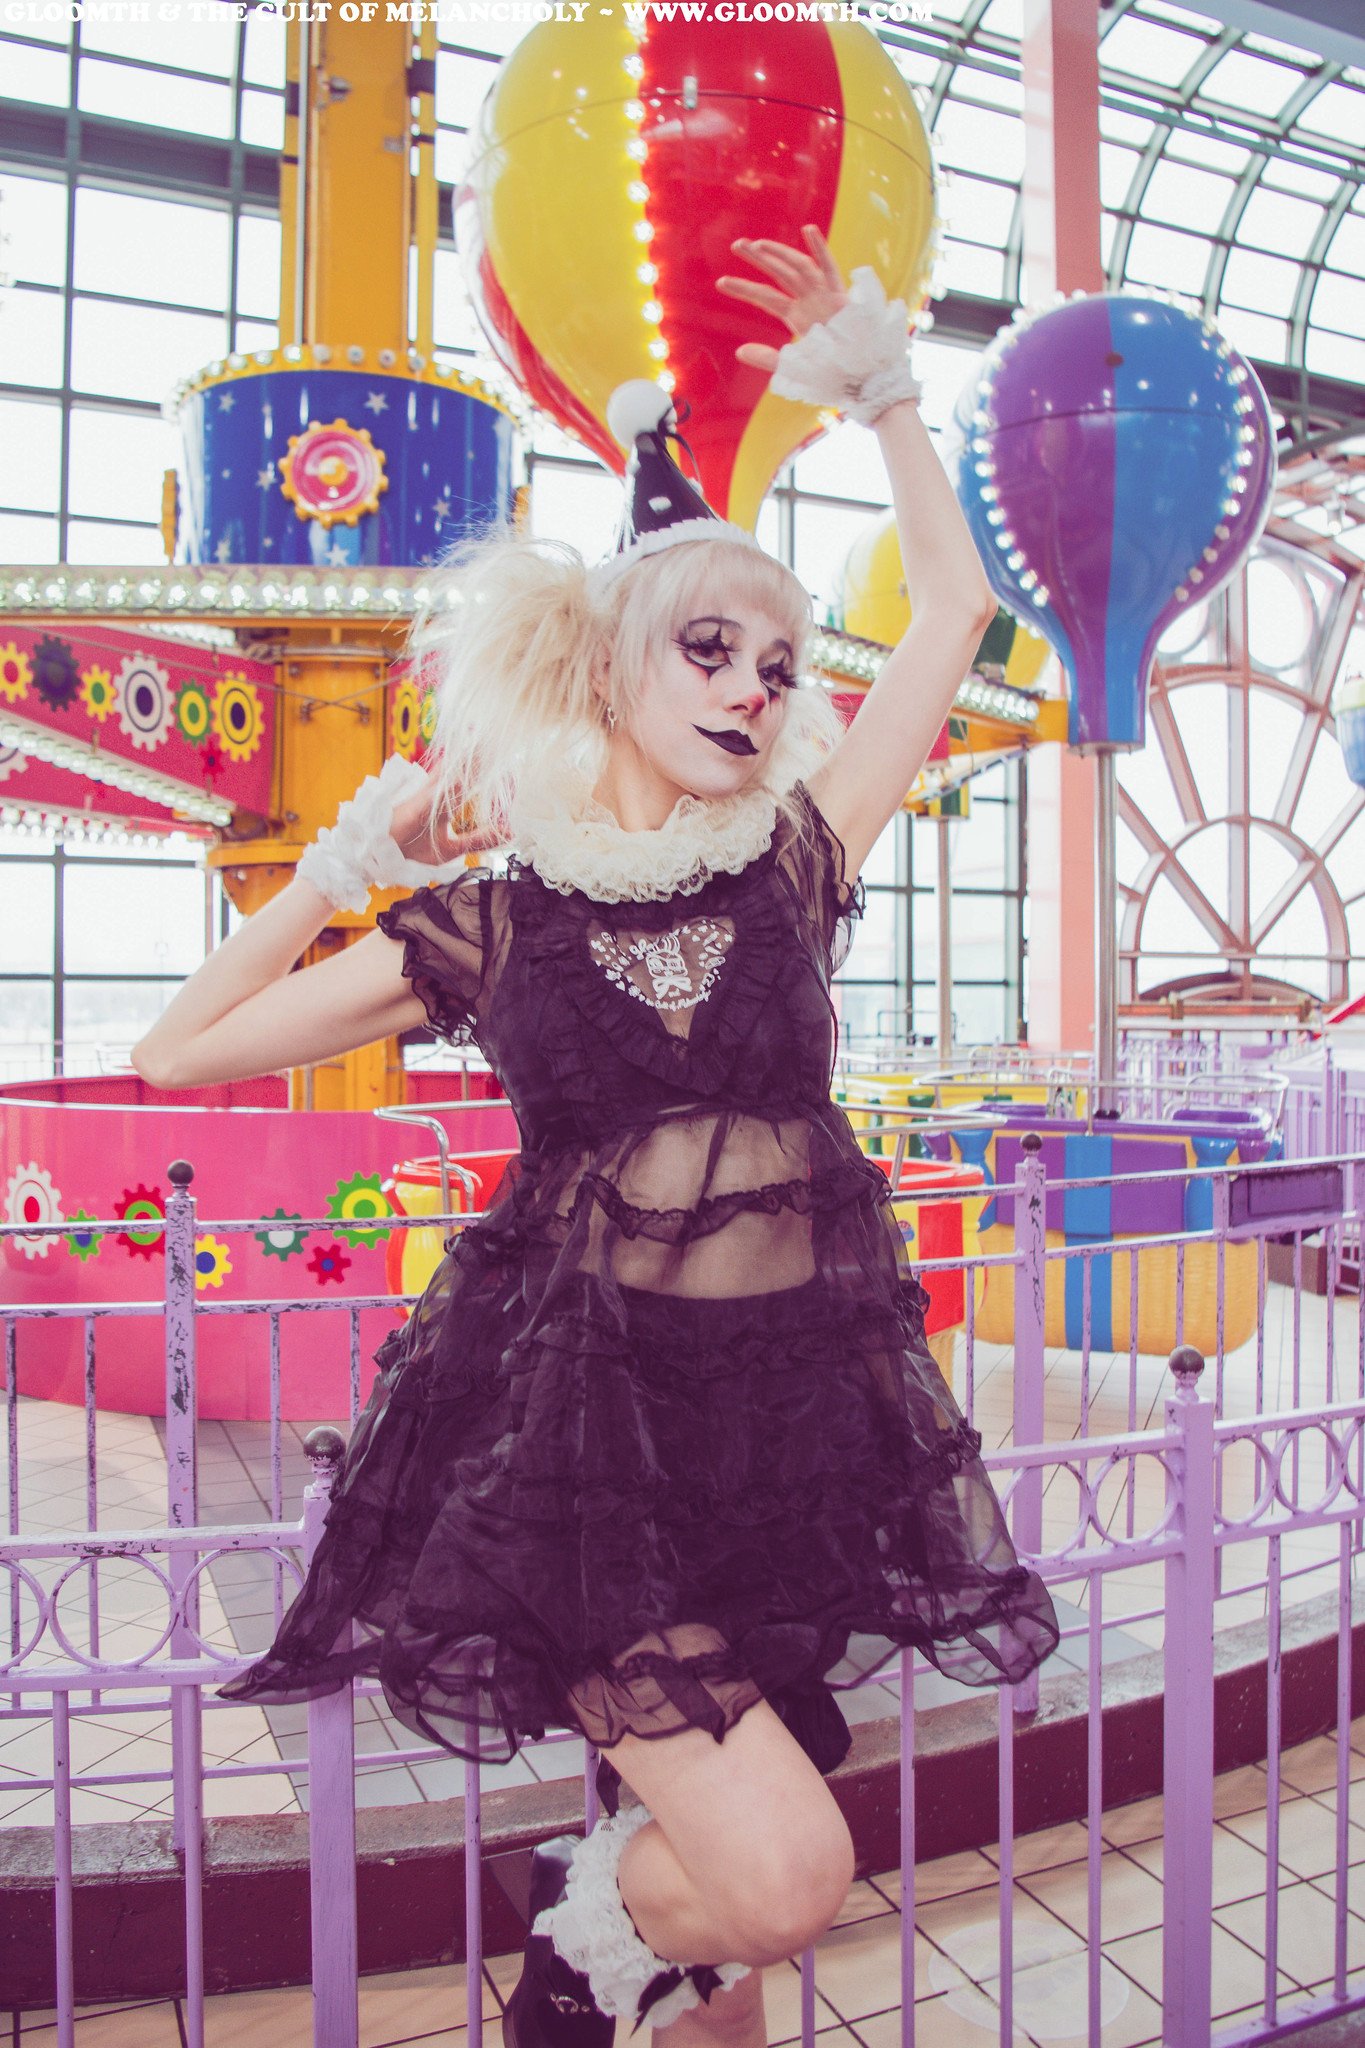 goth clown at theme park - Copy.jpg